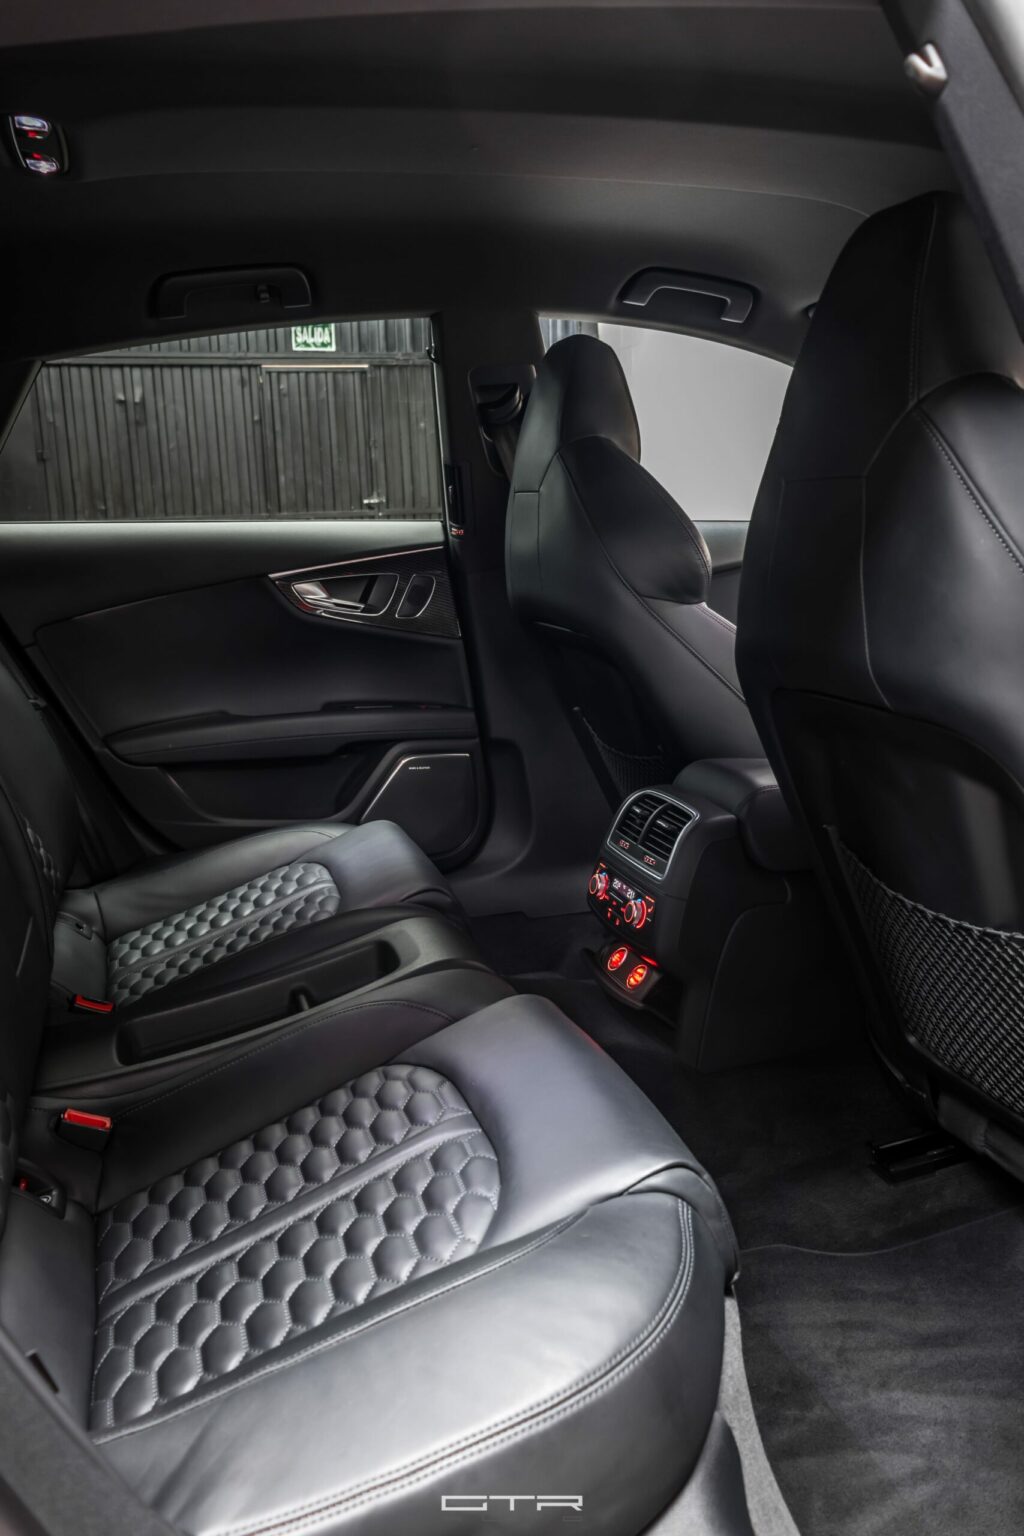 alt = "Audi RS7 Sportback interior by GTR Auto"